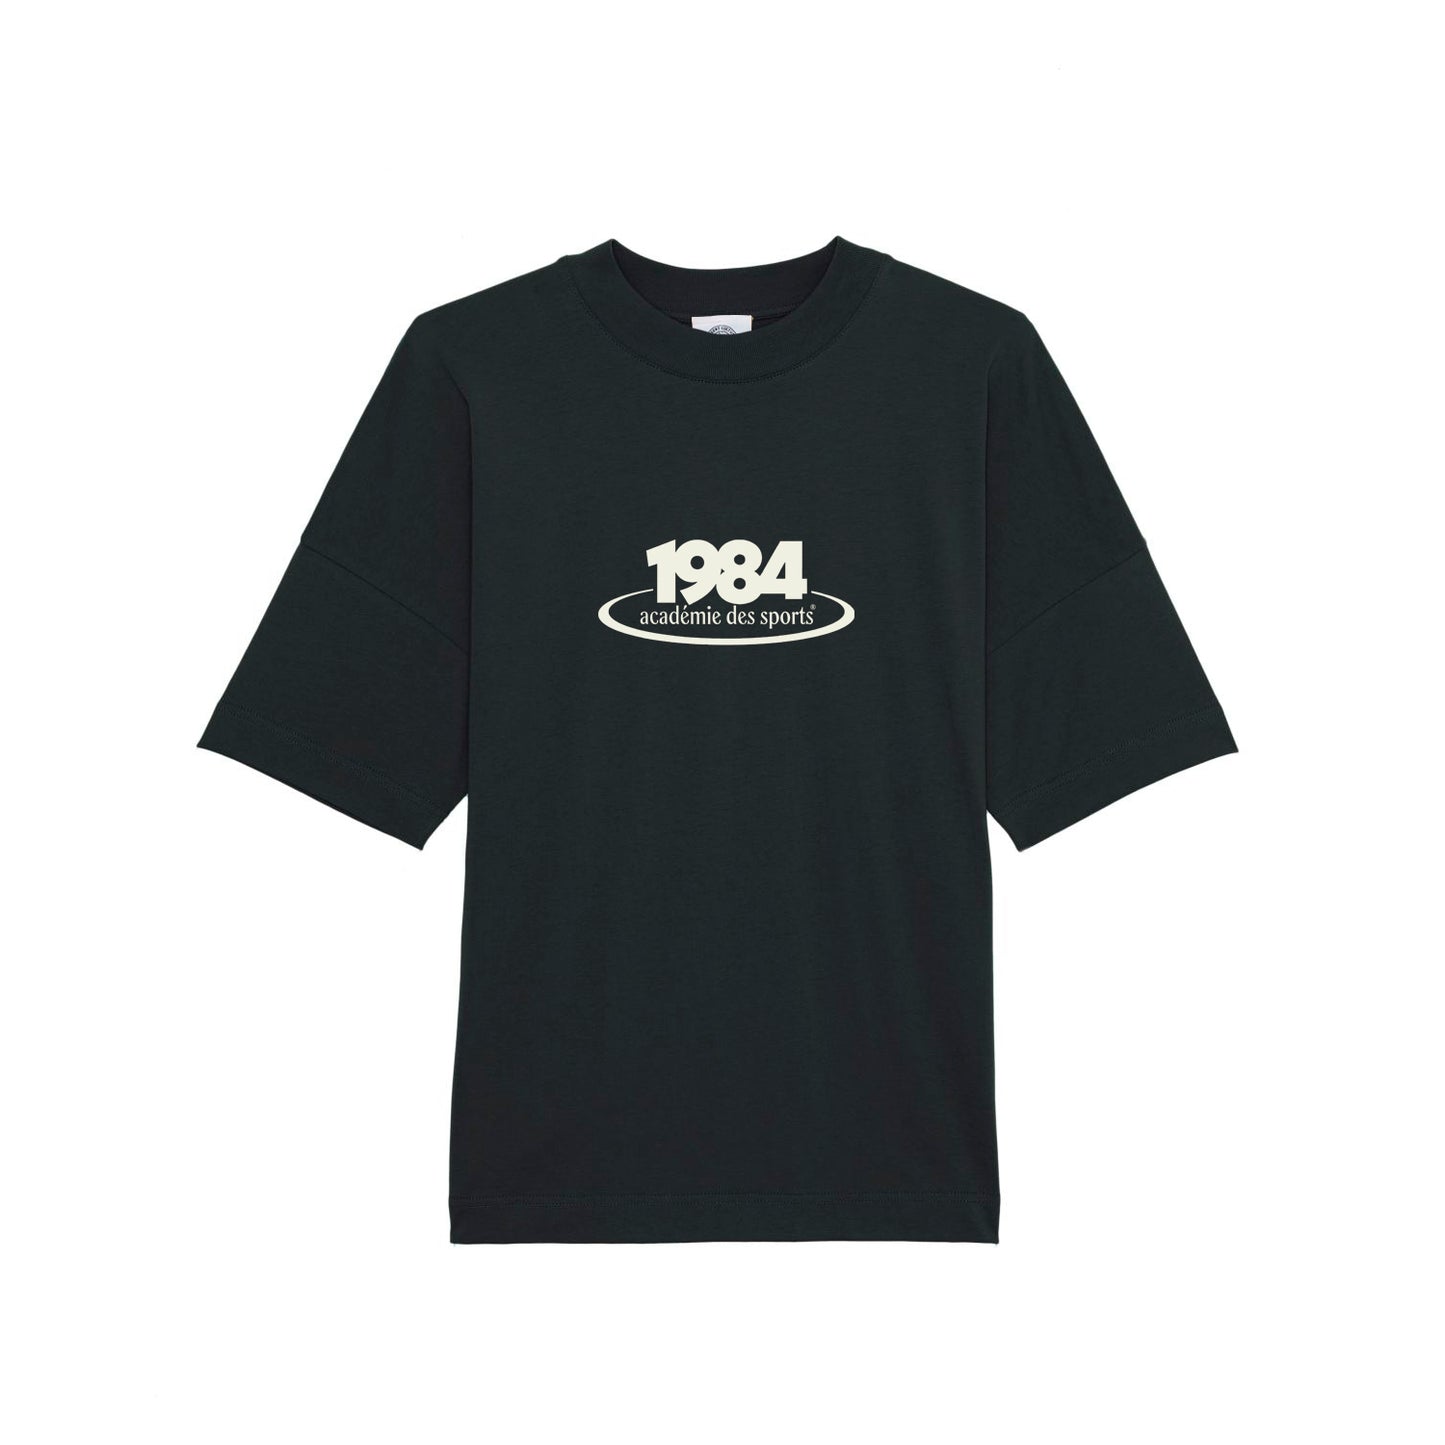 Vice 84 '1984' Oversized Tee - Black